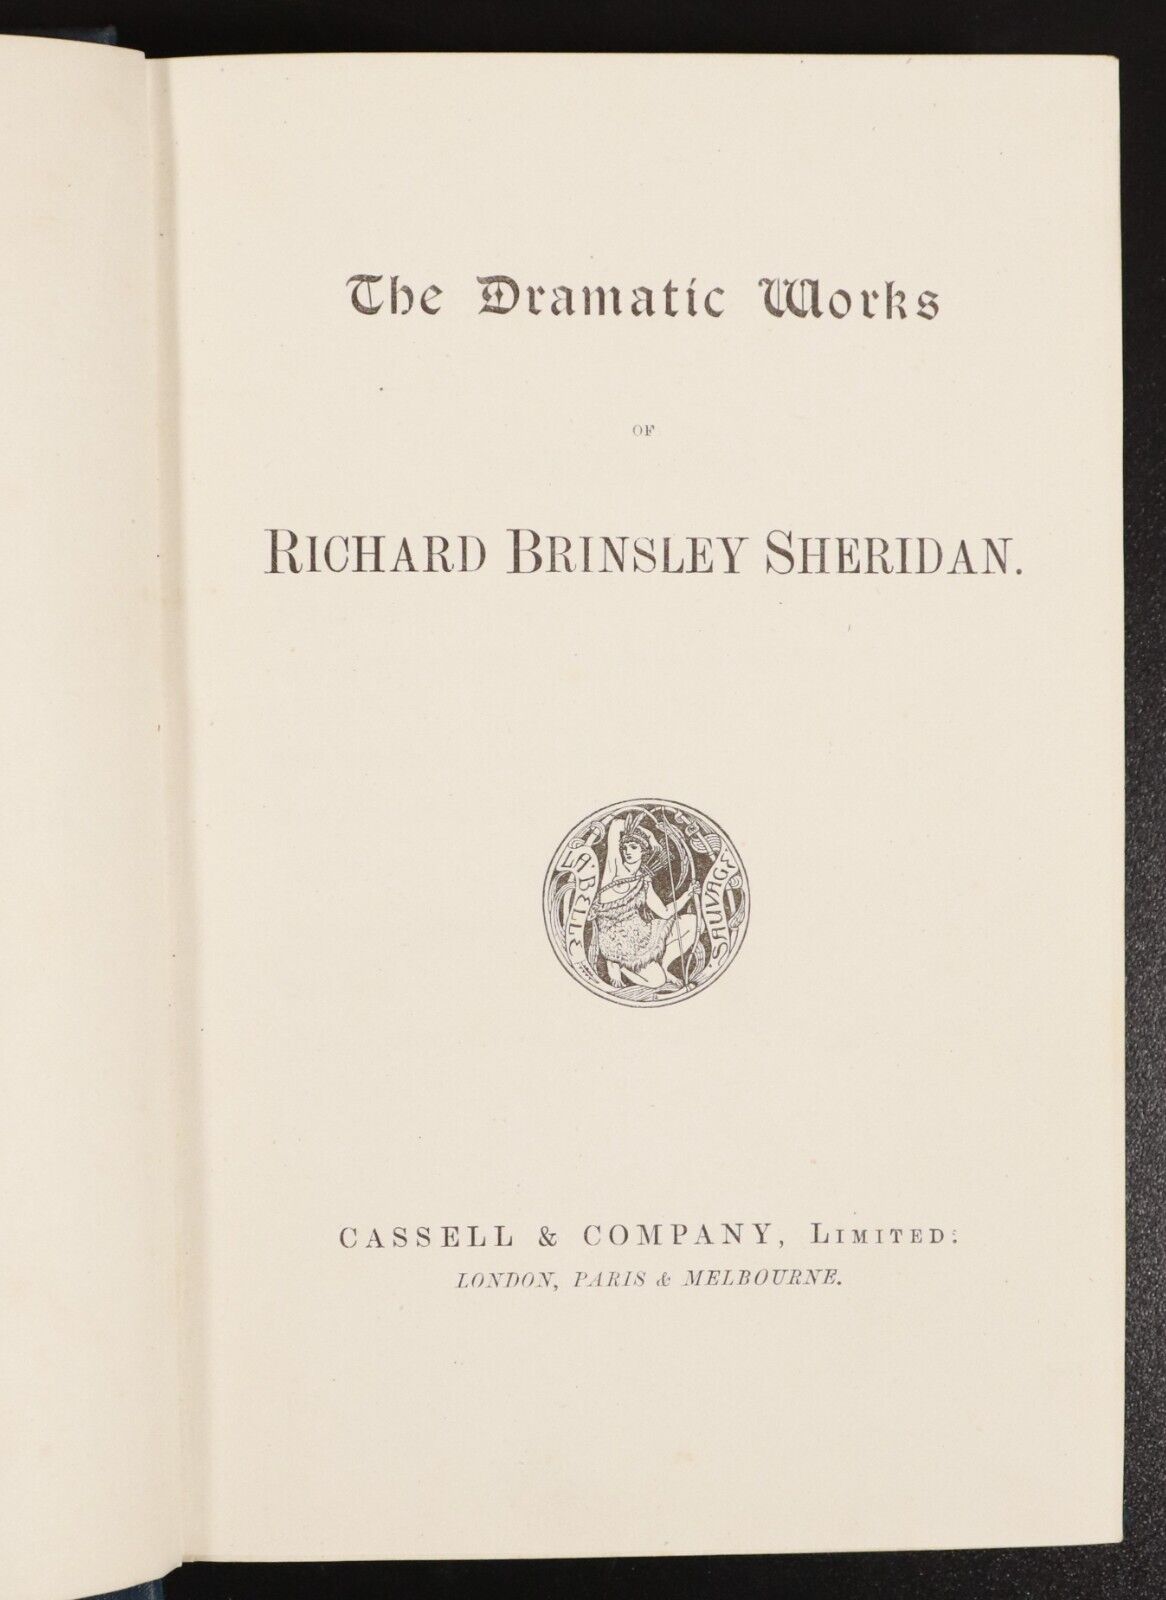 c1900 Dramatic Works Of Richard Brinsley Sheridan Antique Drama Theatre Book - 0